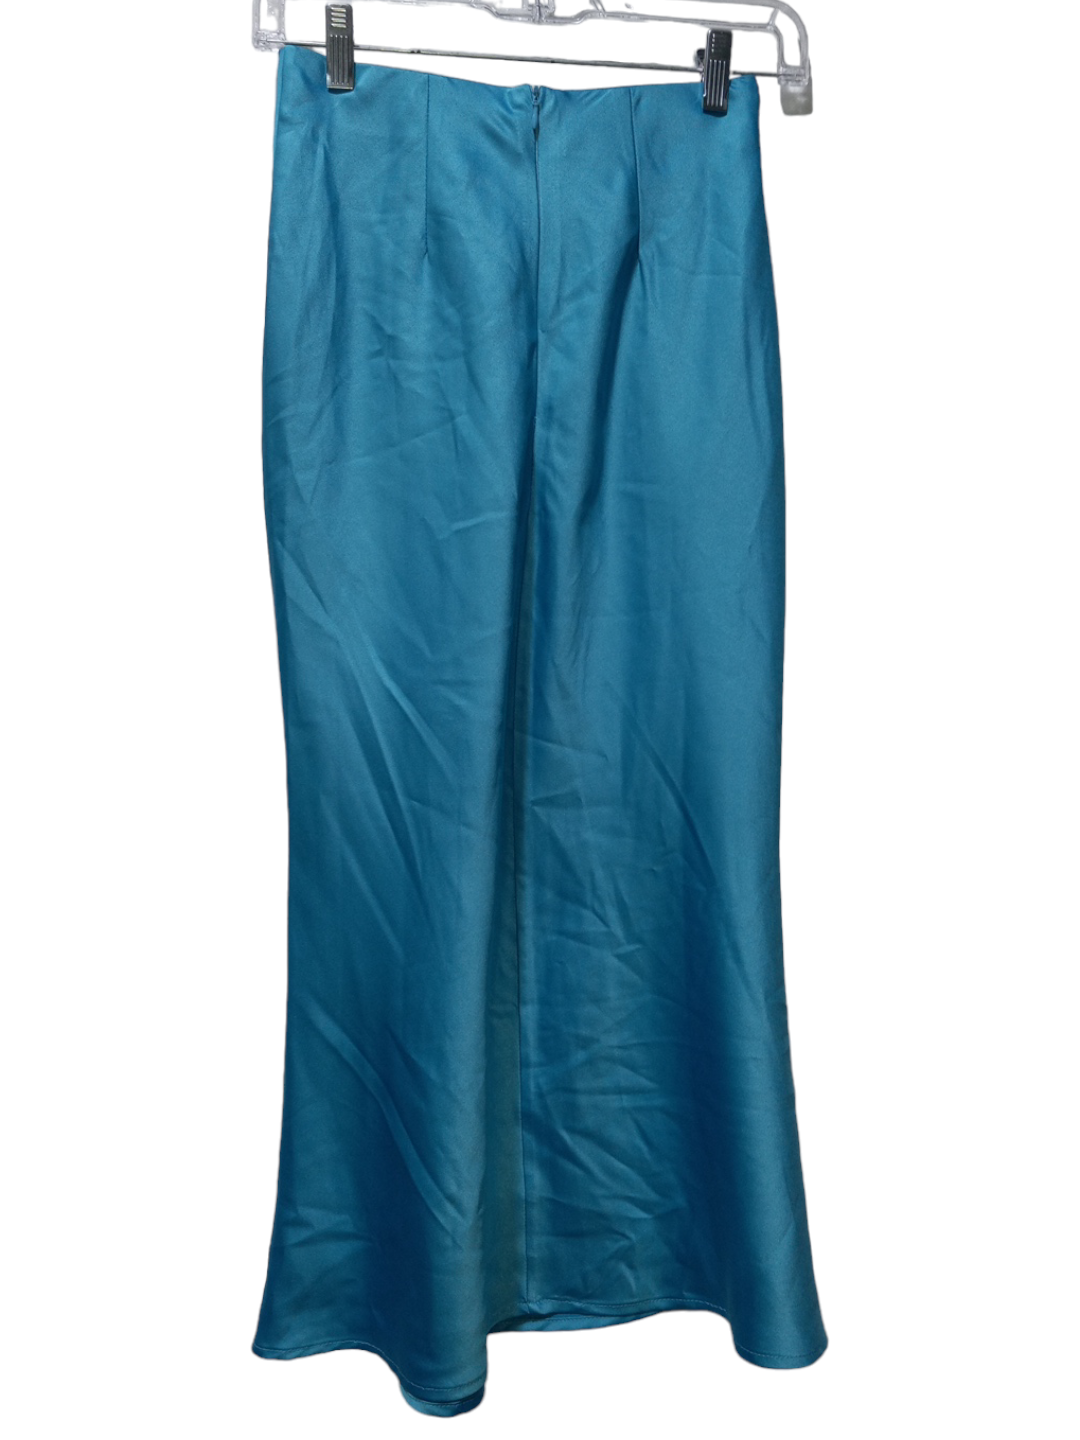 Blue Skirt Midi Glam, Size S